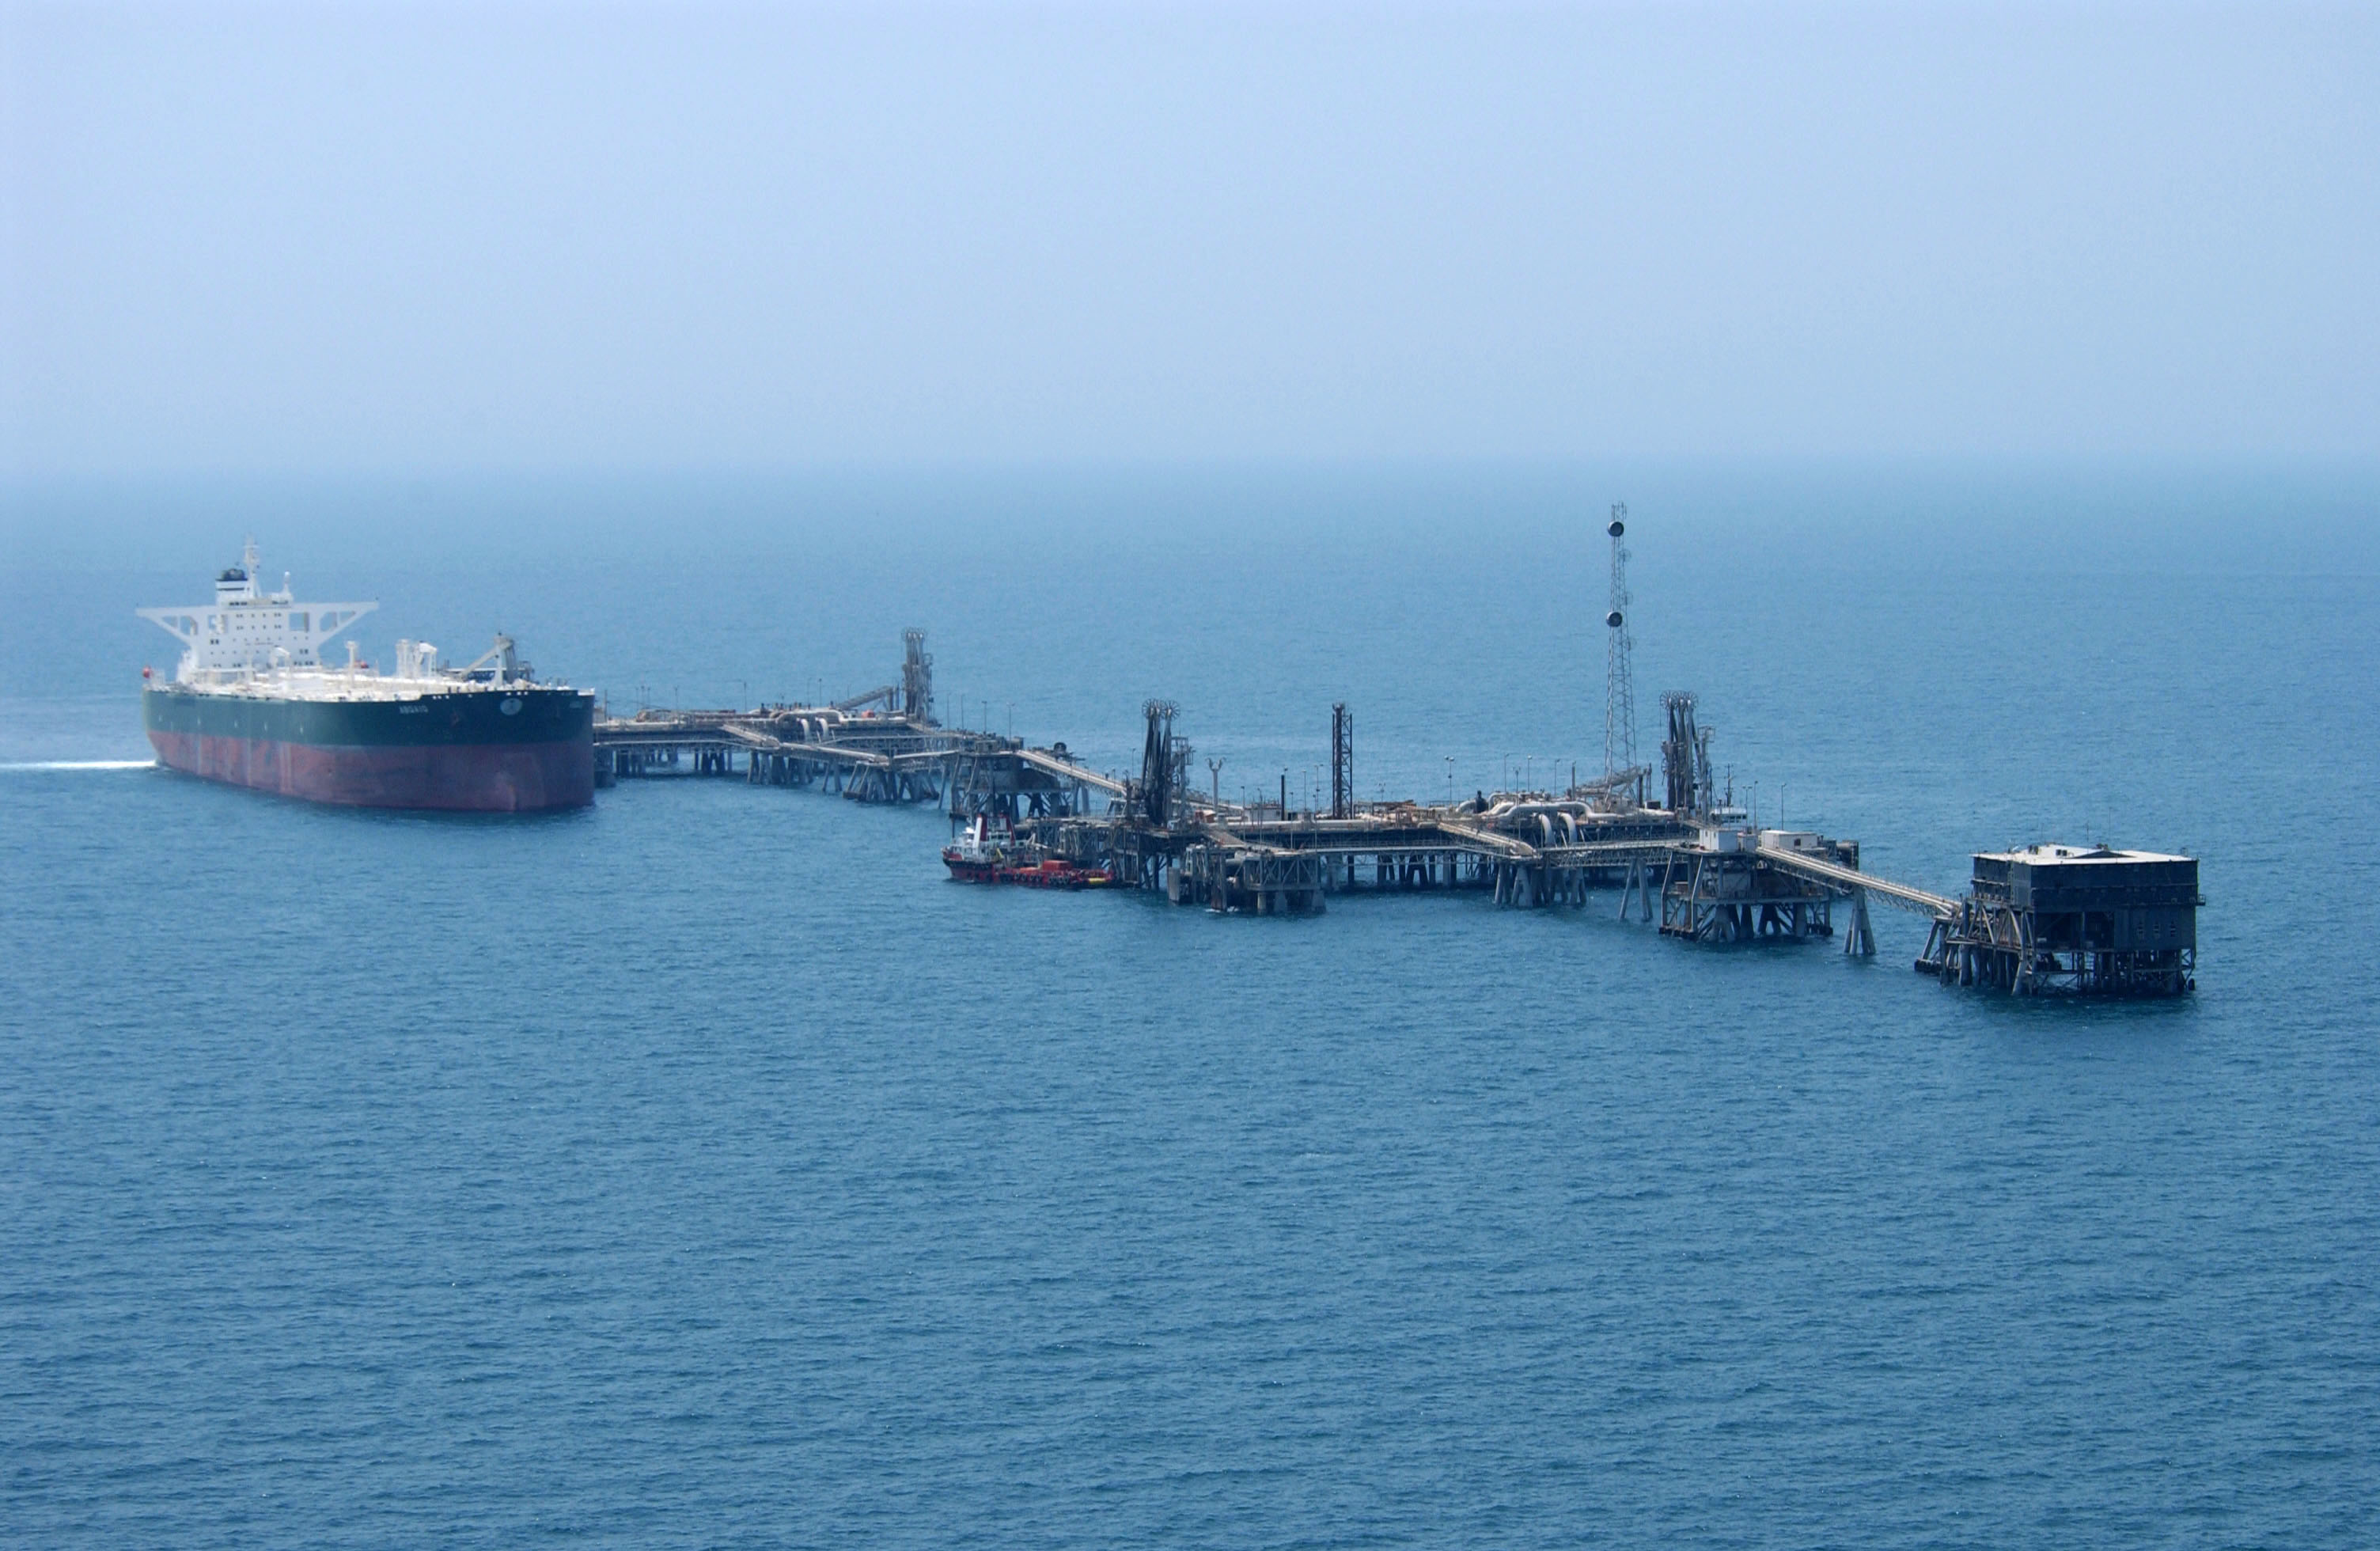 US_Navy_030629-N-4790M-006_Commercial_oil_tanker_AbQaiq_readies_itself_to_receive_oil_at_Mina-Al-Bkar_Oil_terminal_%28MABOT%29%2C_an_off_shore_Iraqi_oil_installation.jpg